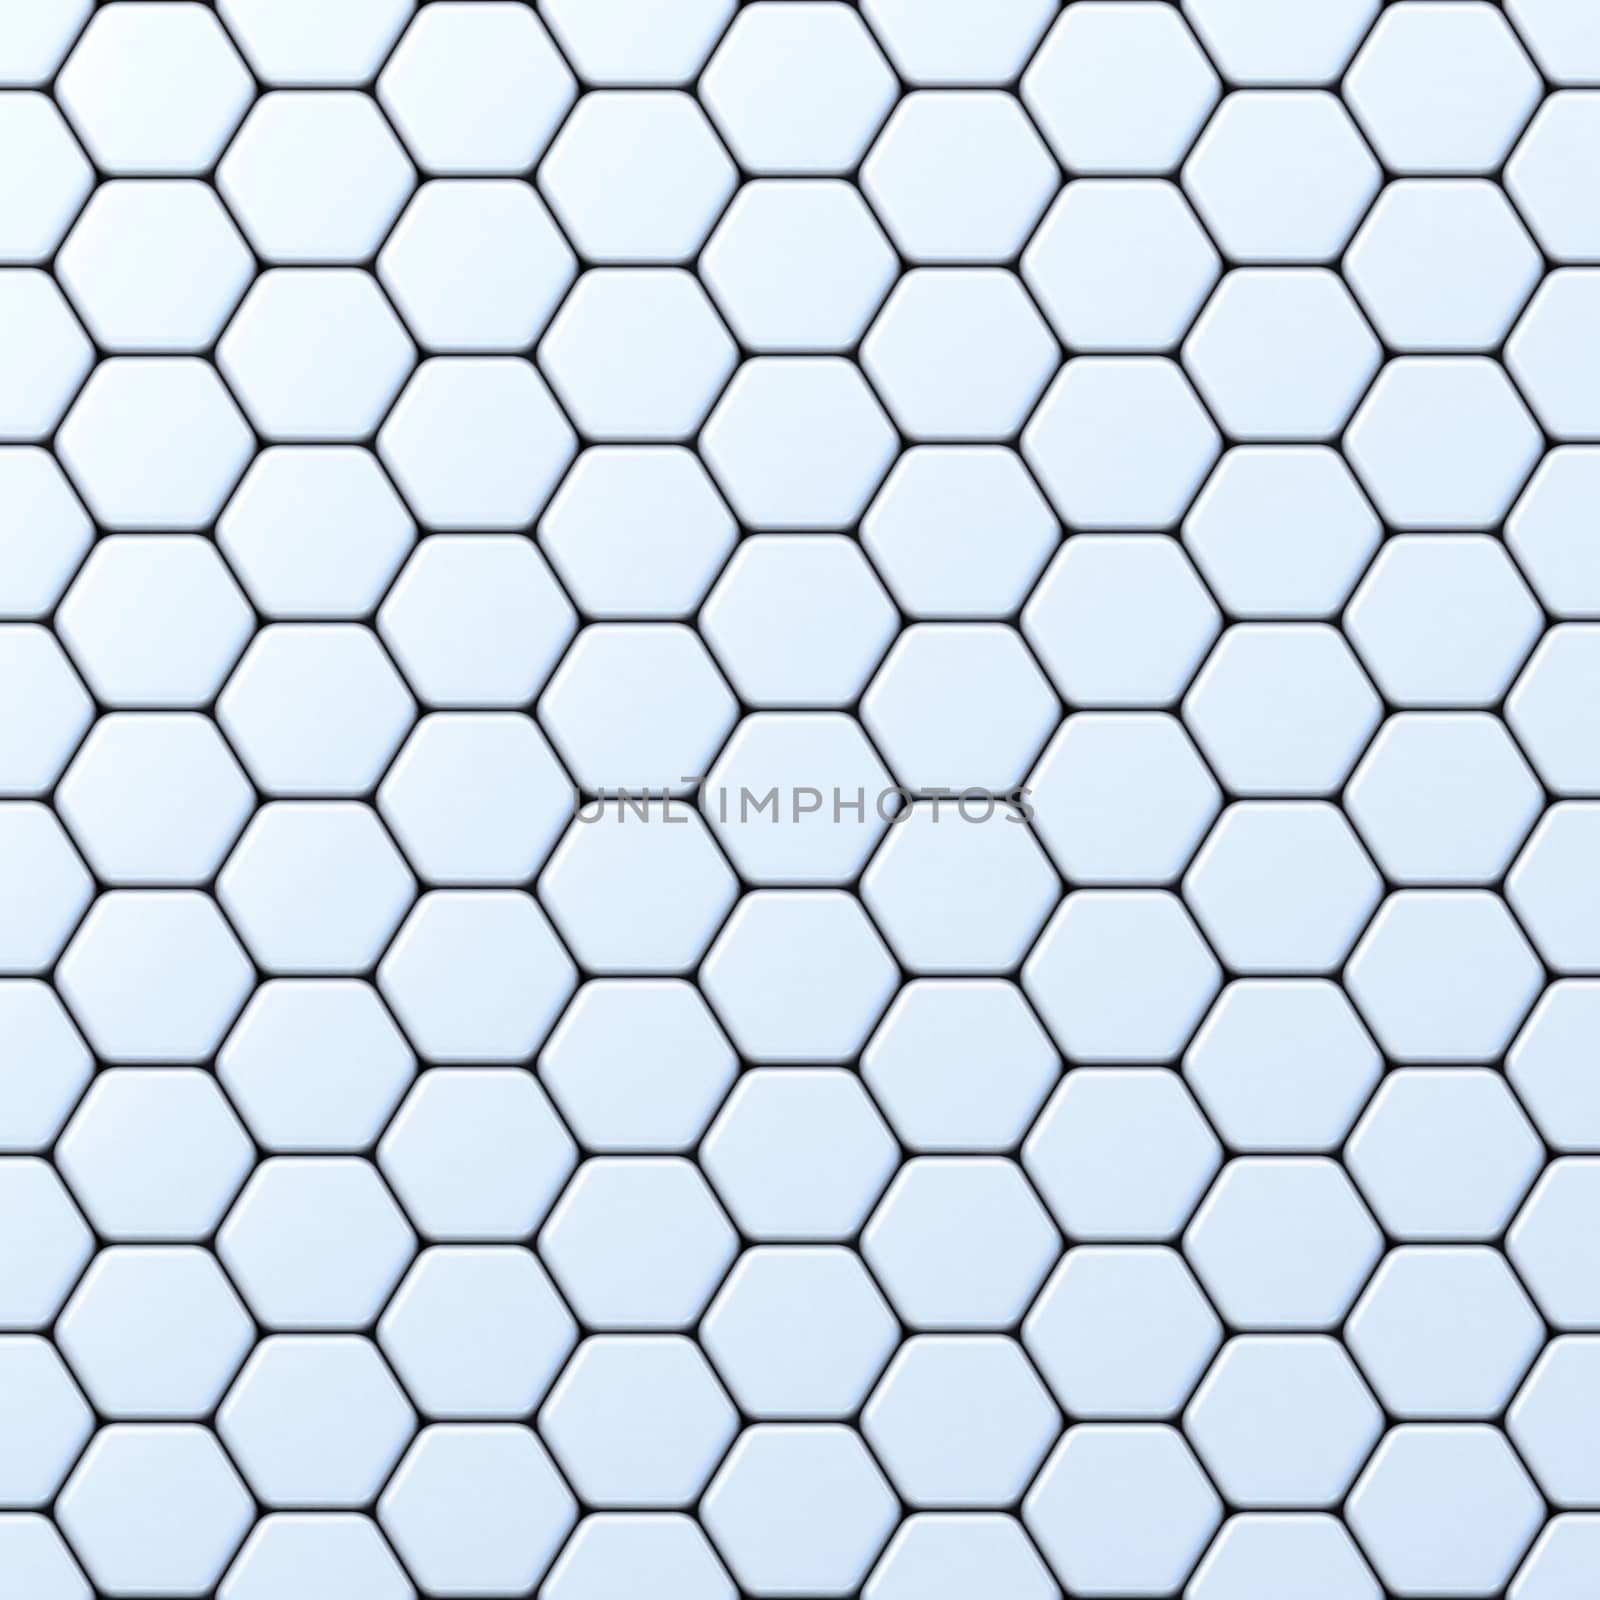 Hexagonal grid 3D by djmilic